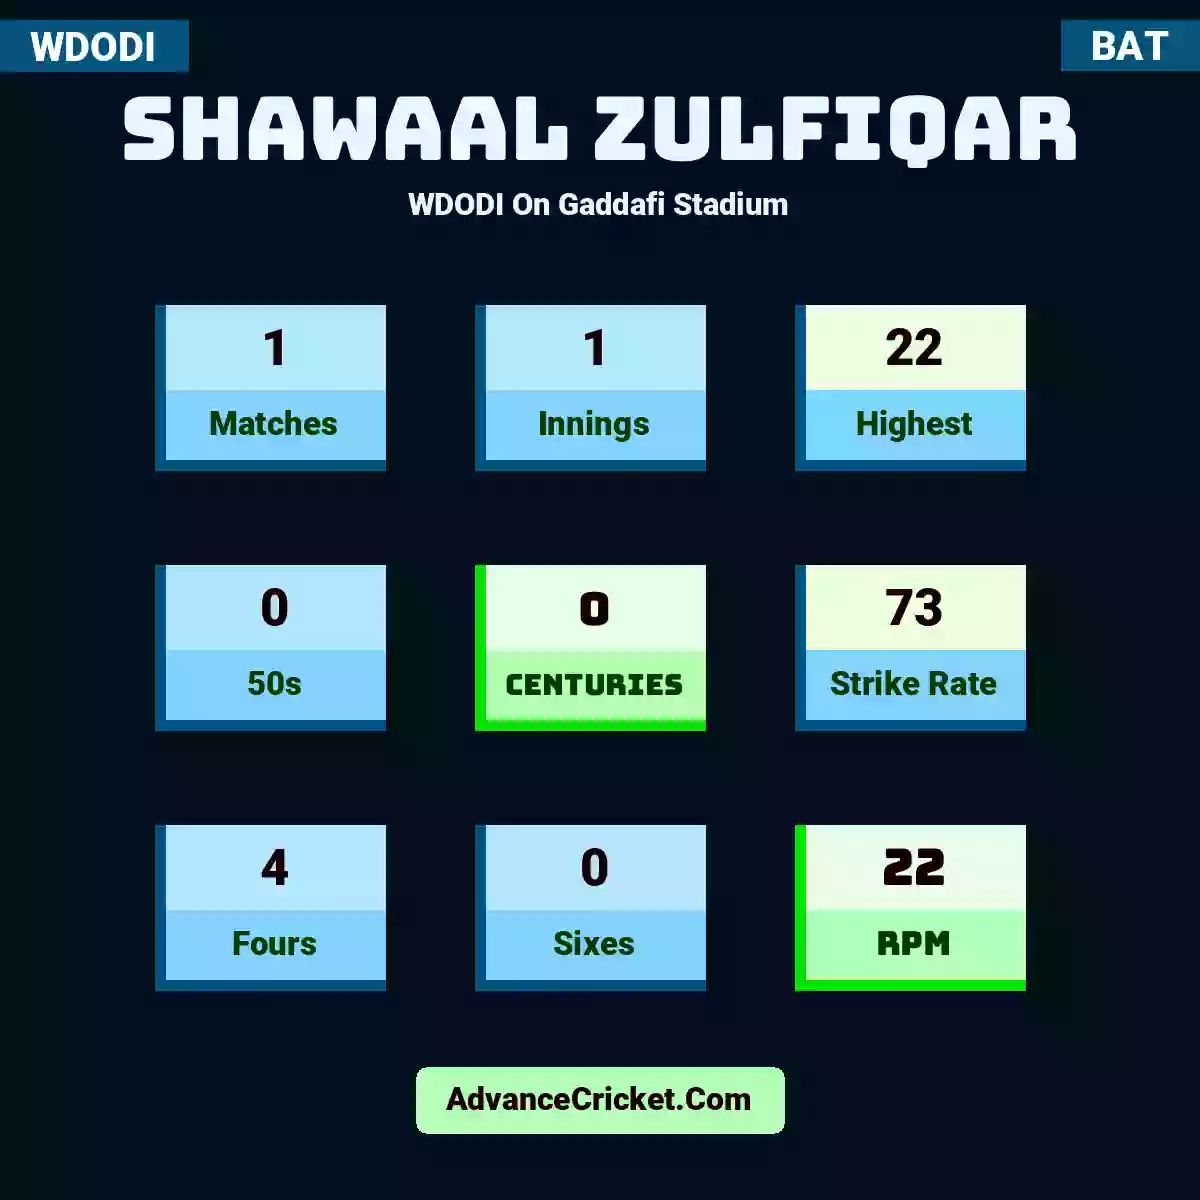 Shawaal Zulfiqar WDODI  On Gaddafi Stadium, Shawaal Zulfiqar played 1 matches, scored 22 runs as highest, 0 half-centuries, and 0 centuries, with a strike rate of 73. S.Zulfiqar hit 4 fours and 0 sixes, with an RPM of 22.